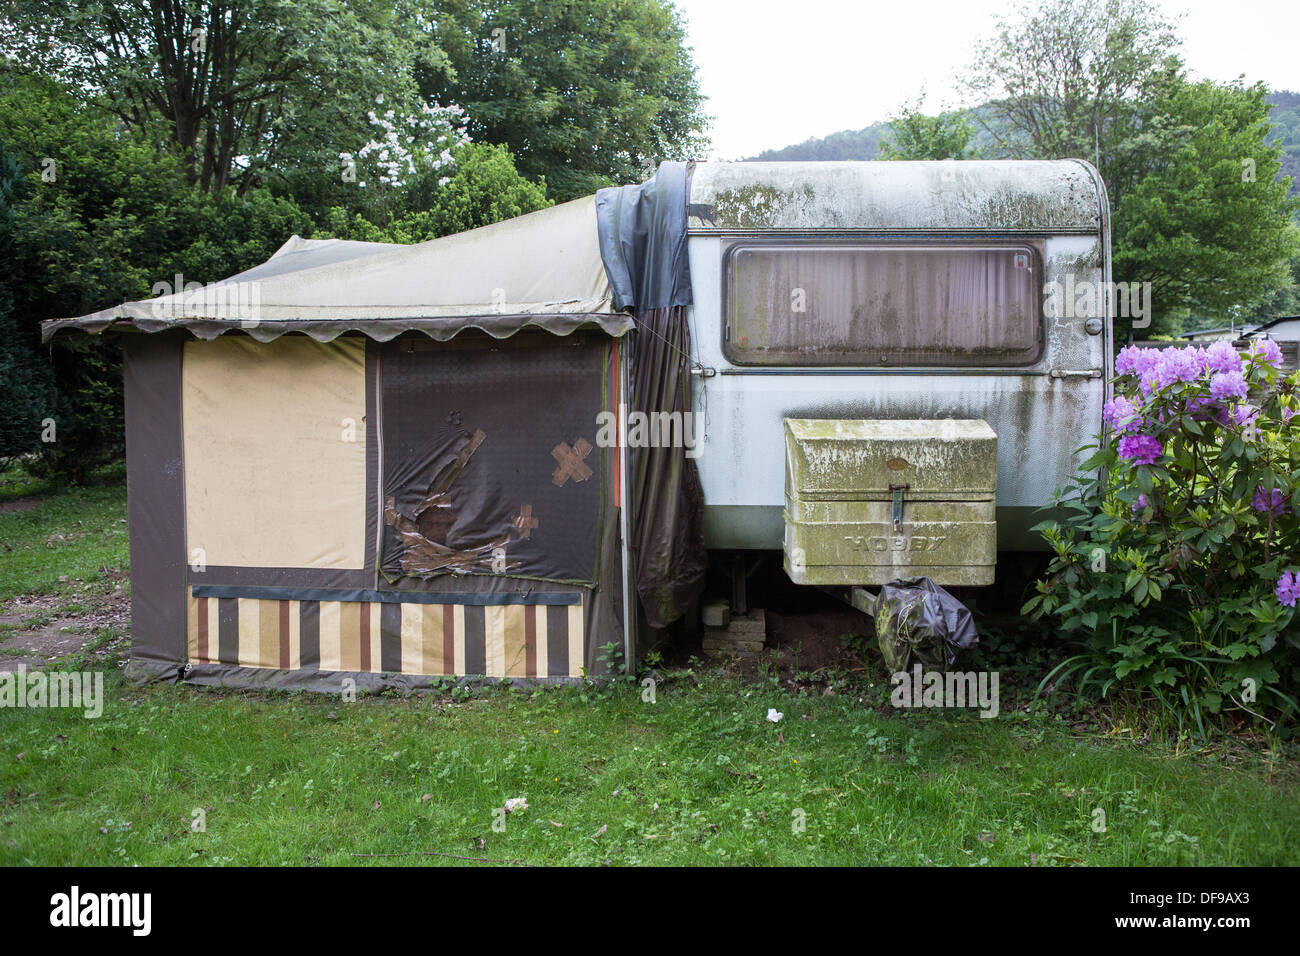 Dilapidated caravan and awning Stock Photo